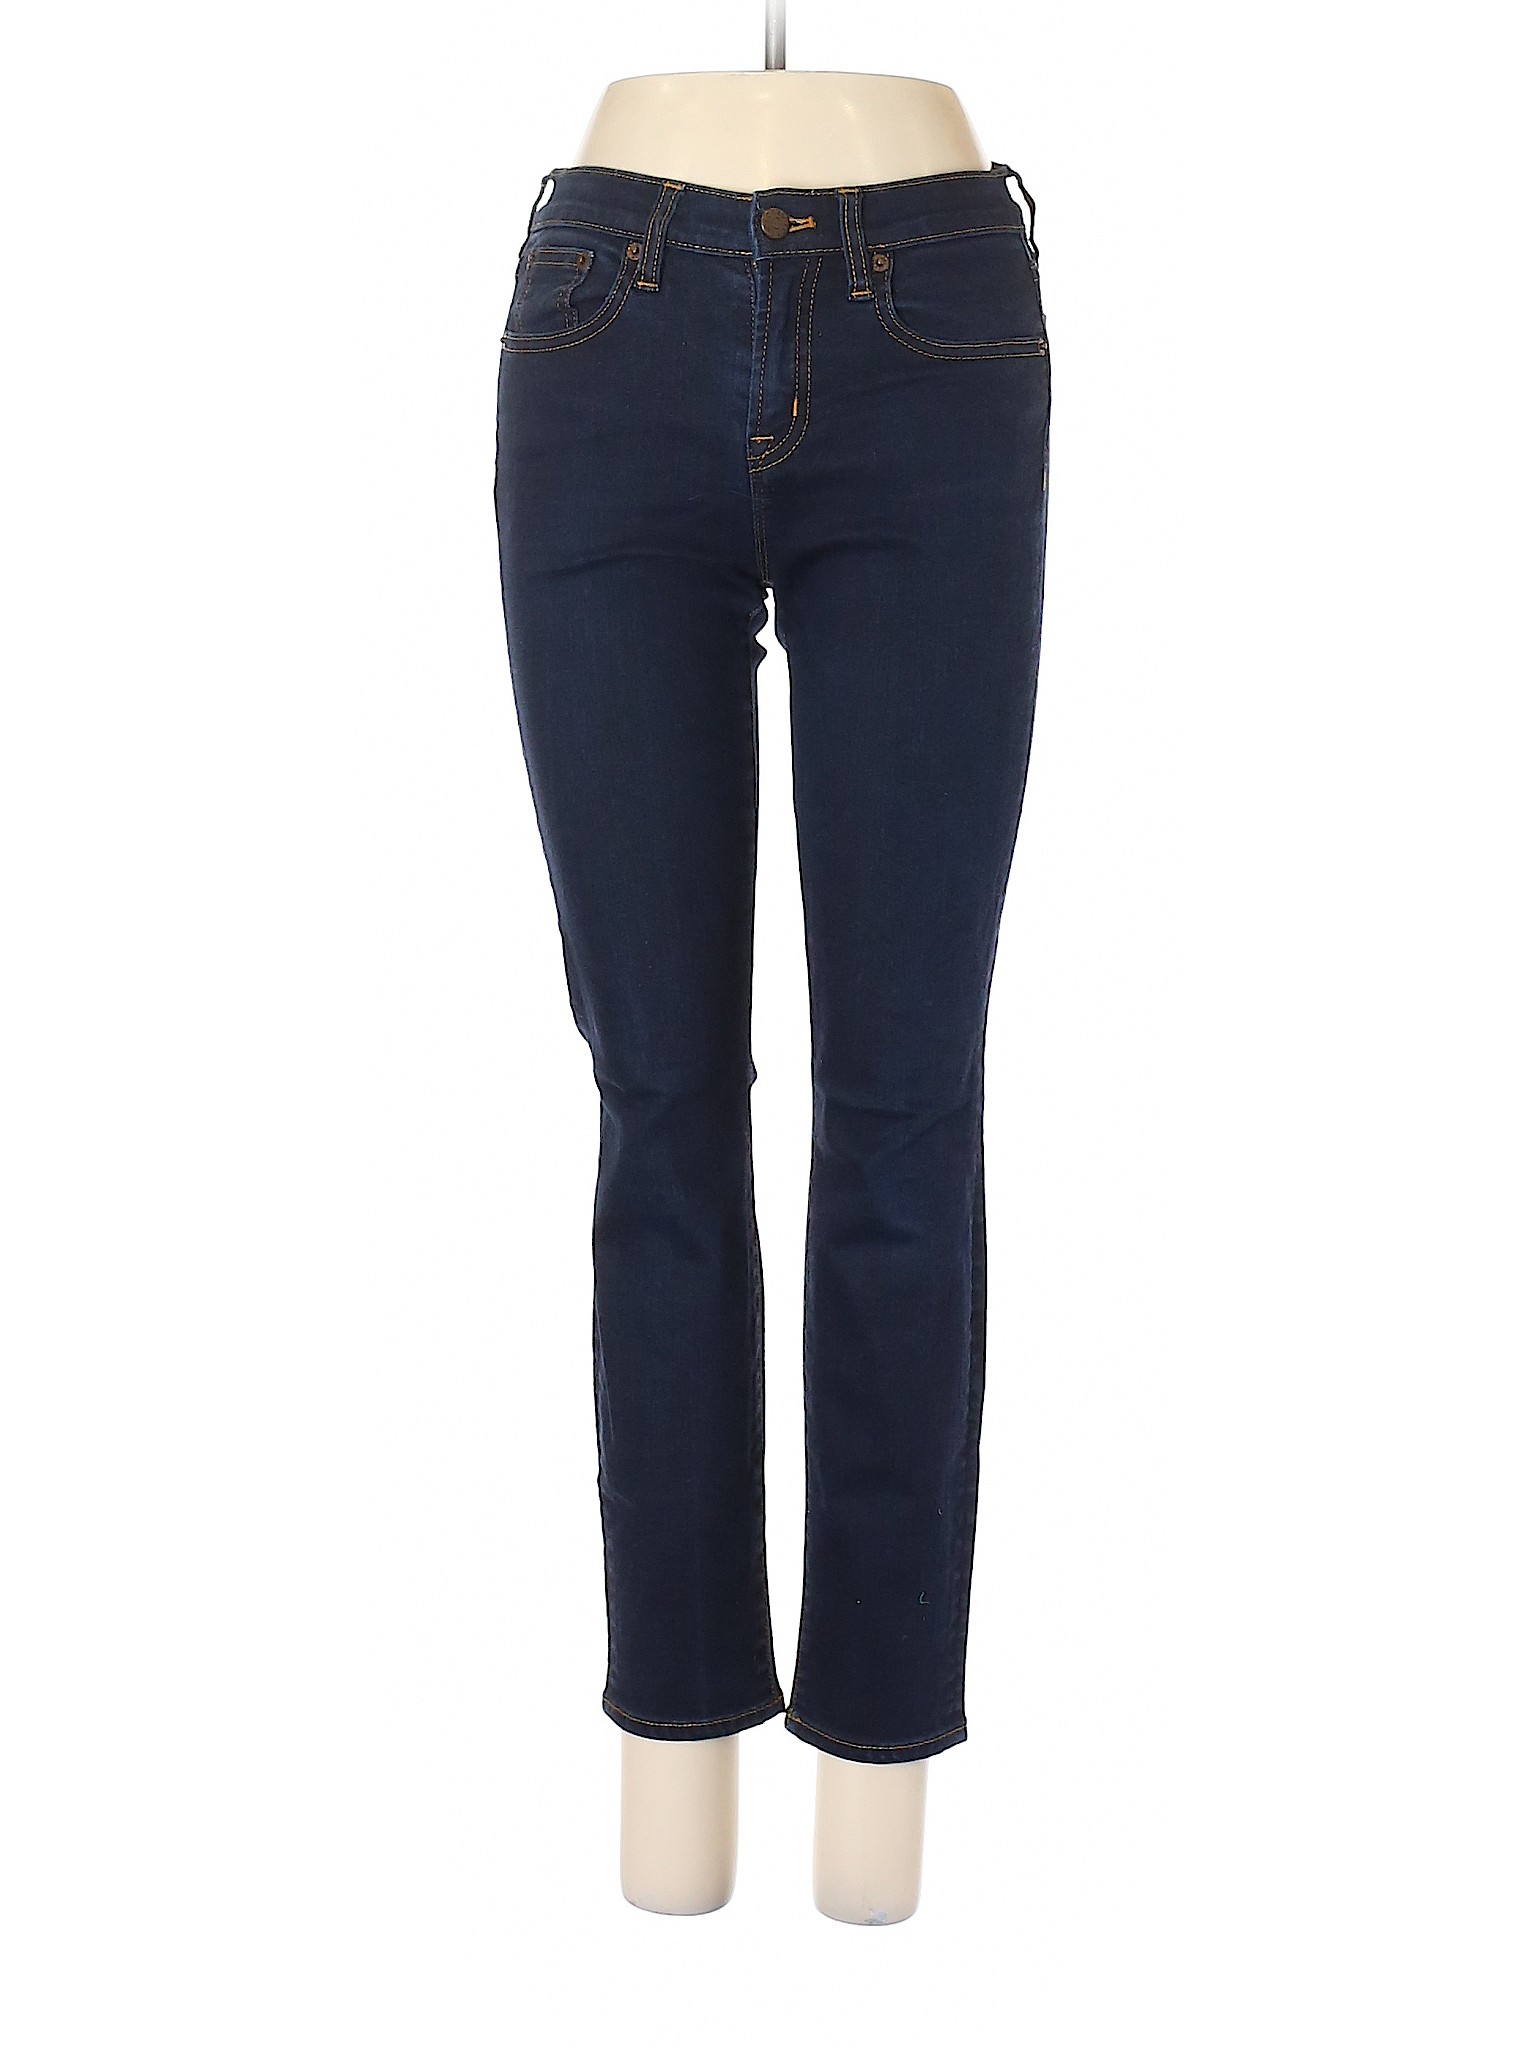 J.Crew Factory Store Solid Blue Jeans 26 Waist - 85% off | thredUP